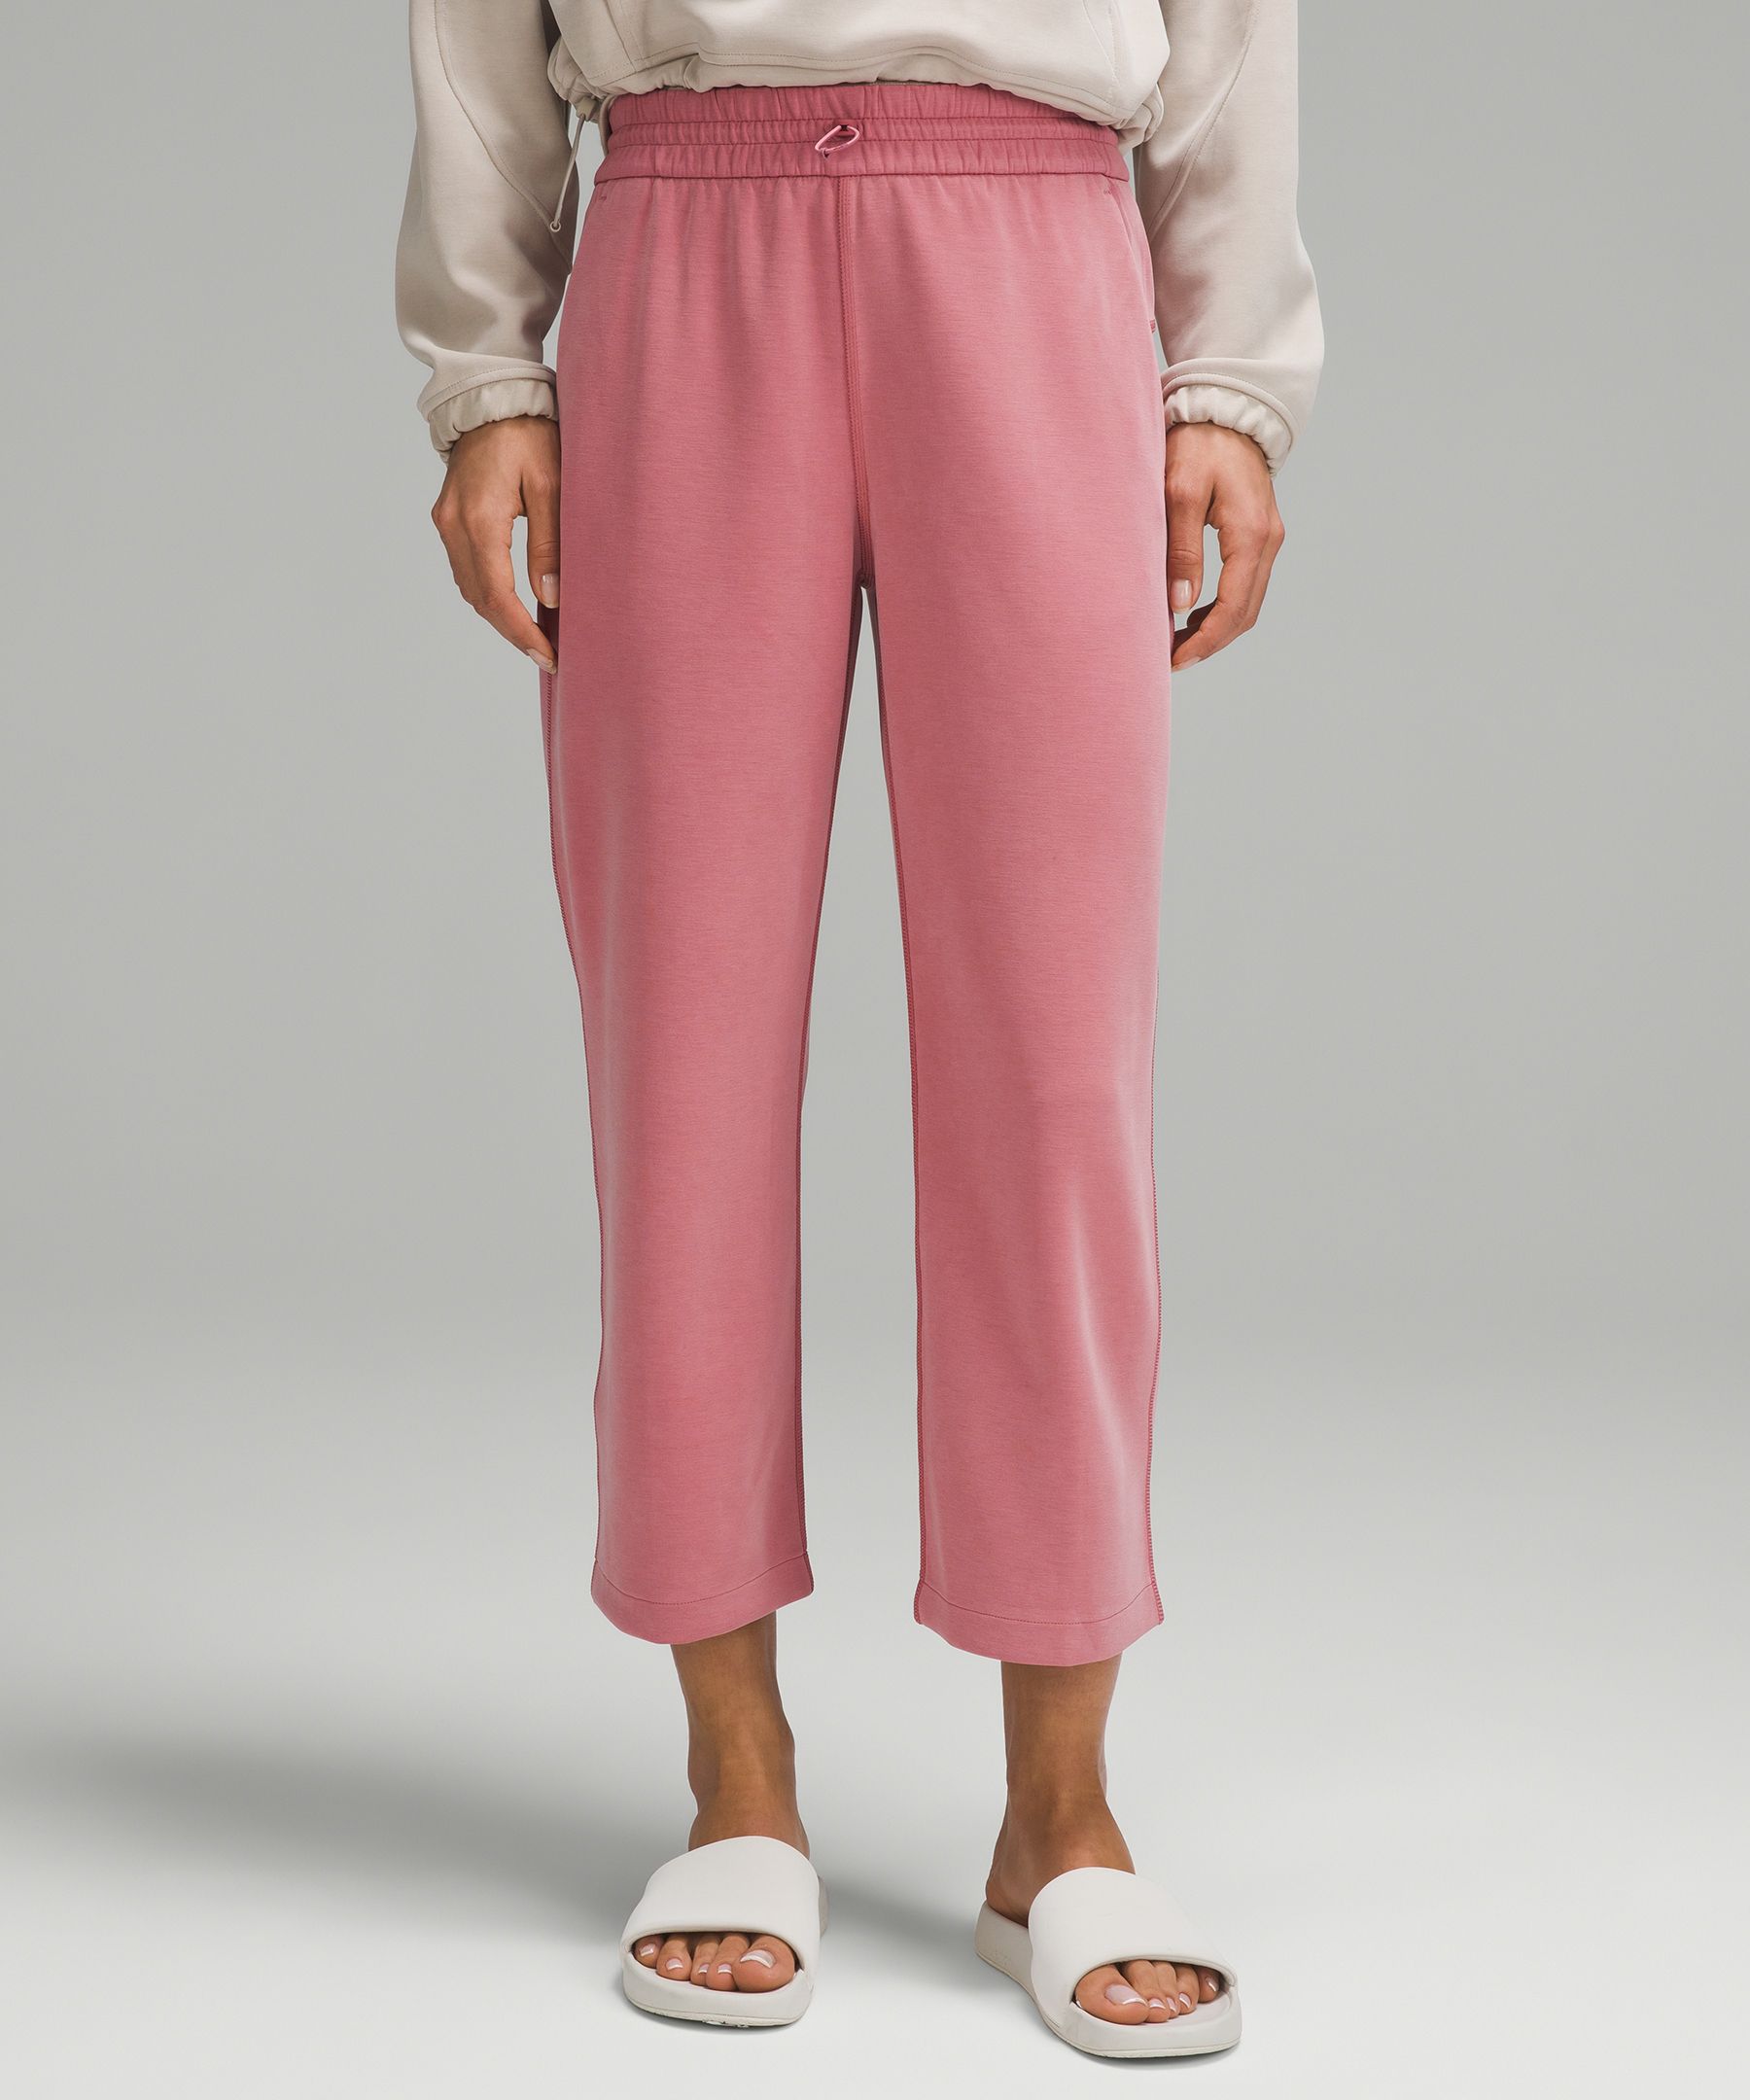 Soft Surroundings Superla Pull On Pants Women's Medium Pink Stretch Cropped